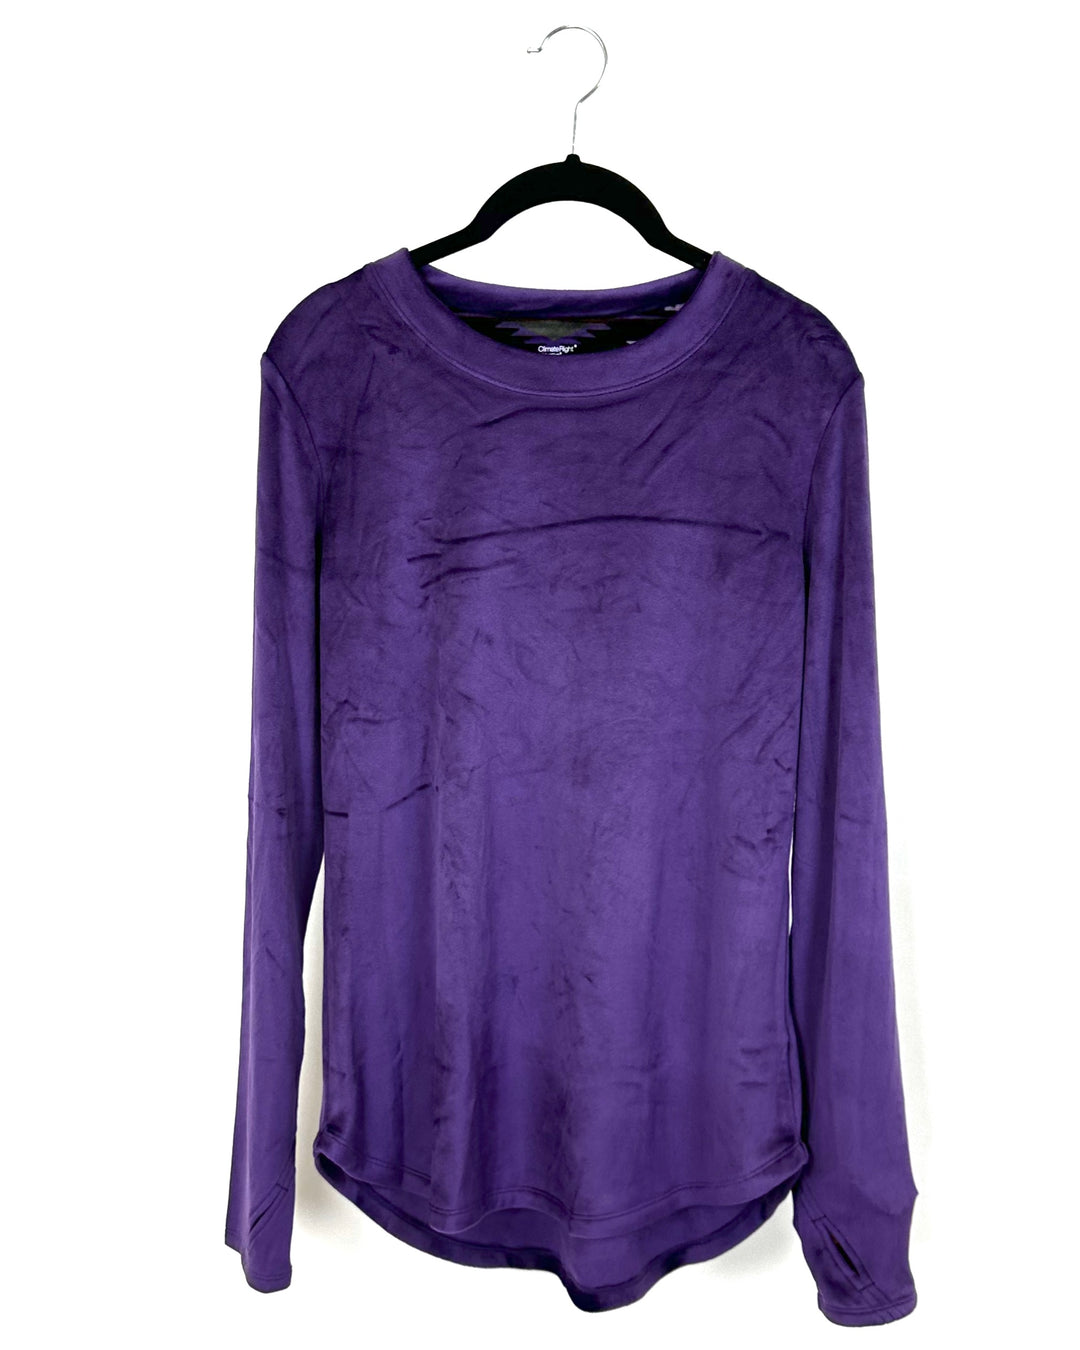 Purple Pajama Shirt - Size 6/8